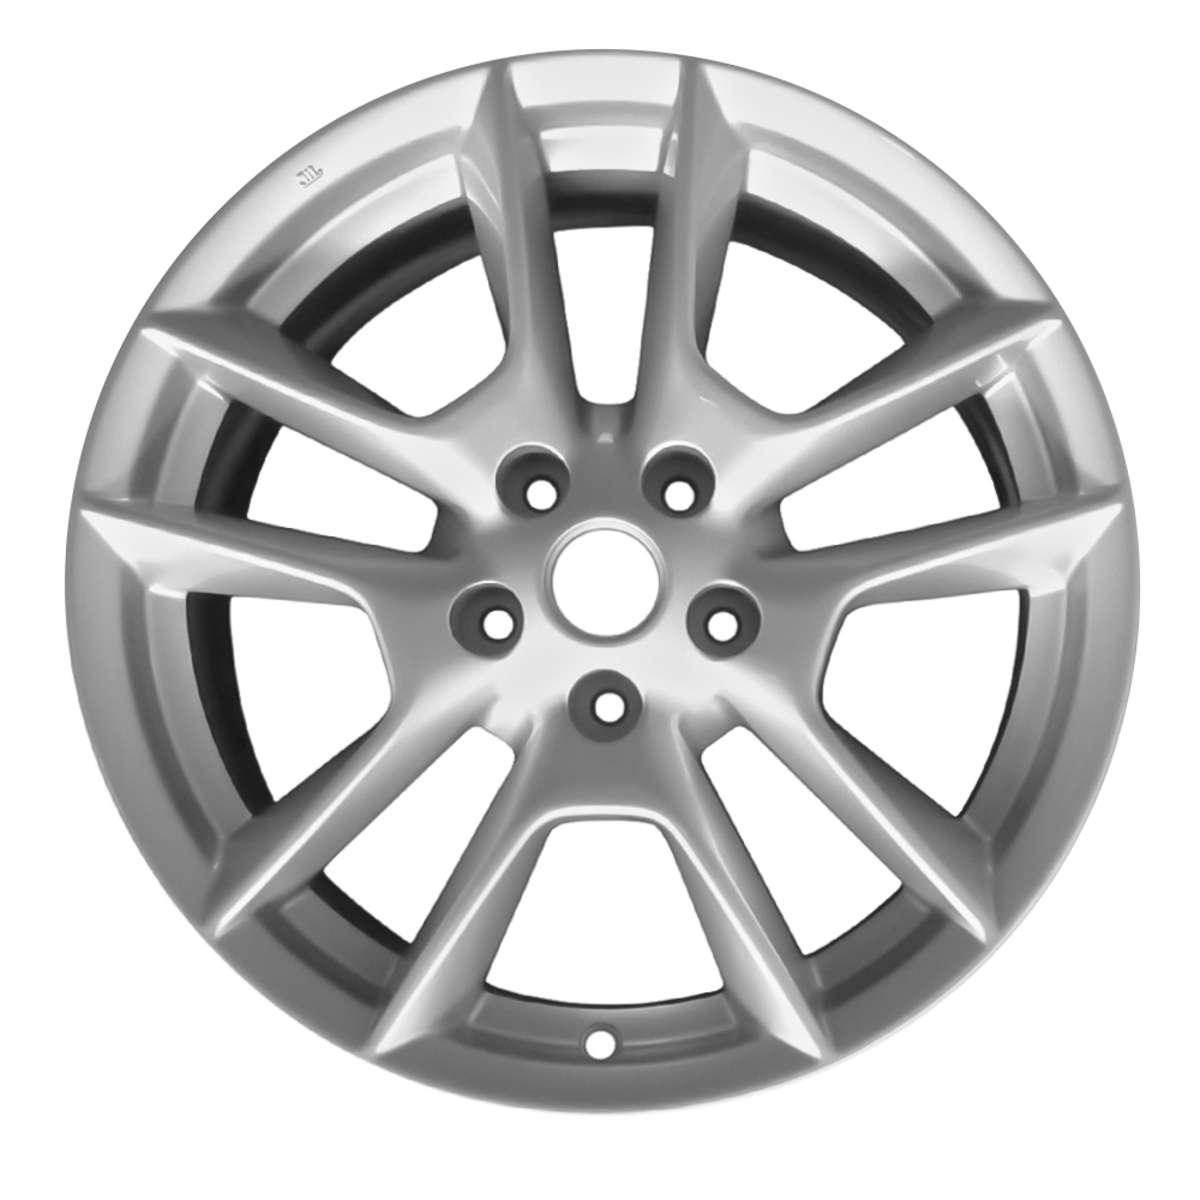 2014 Nissan Maxima 18" OEM Wheel Rim W62511S